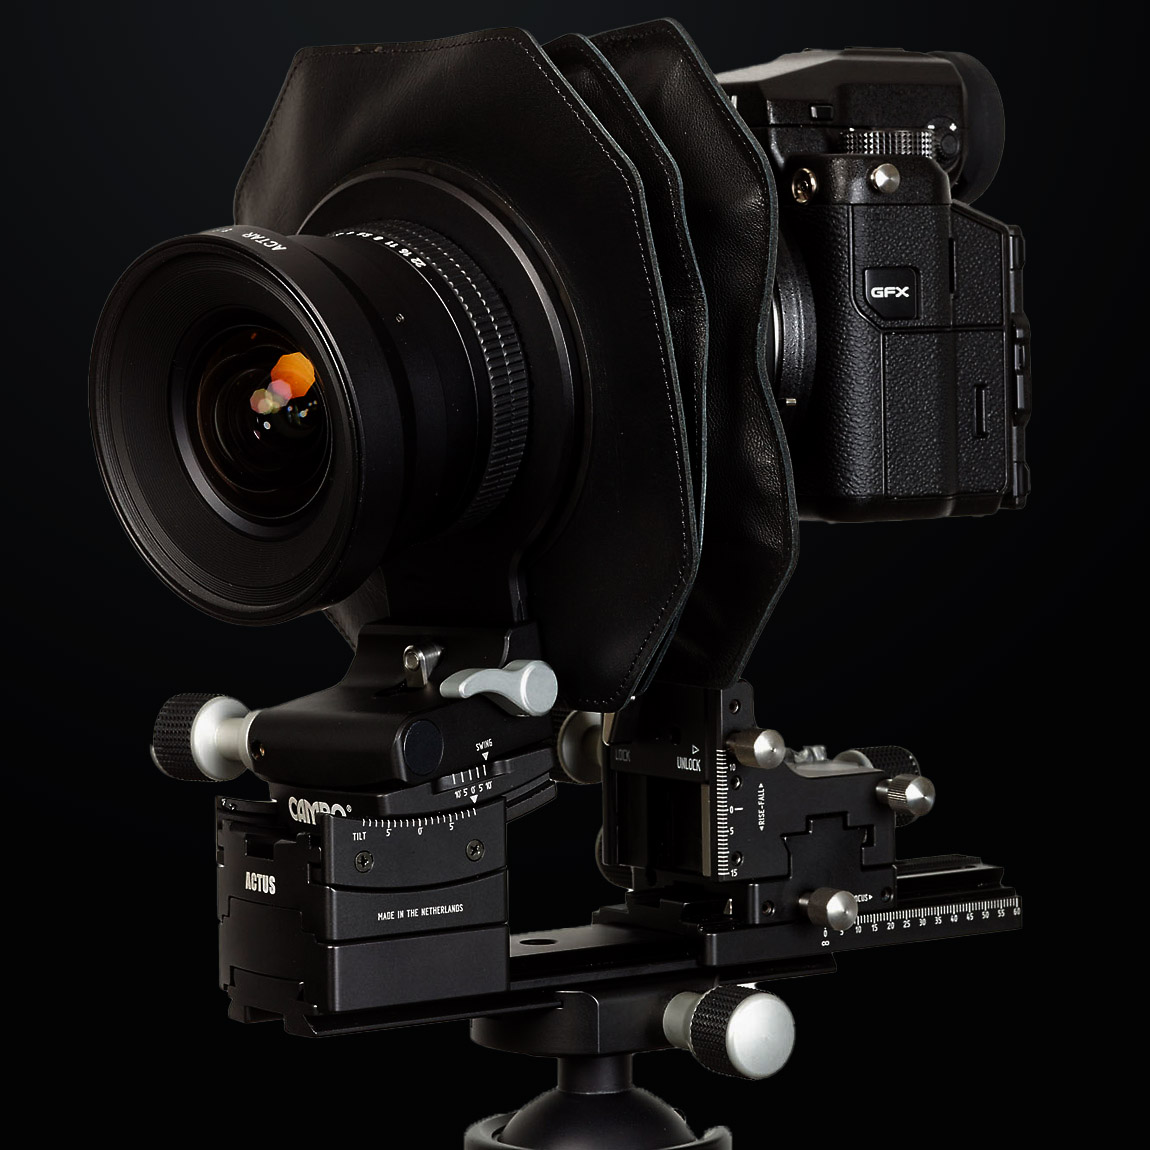 actus-gfx-100s-fujifilm-cambo-tip-lens-tethered